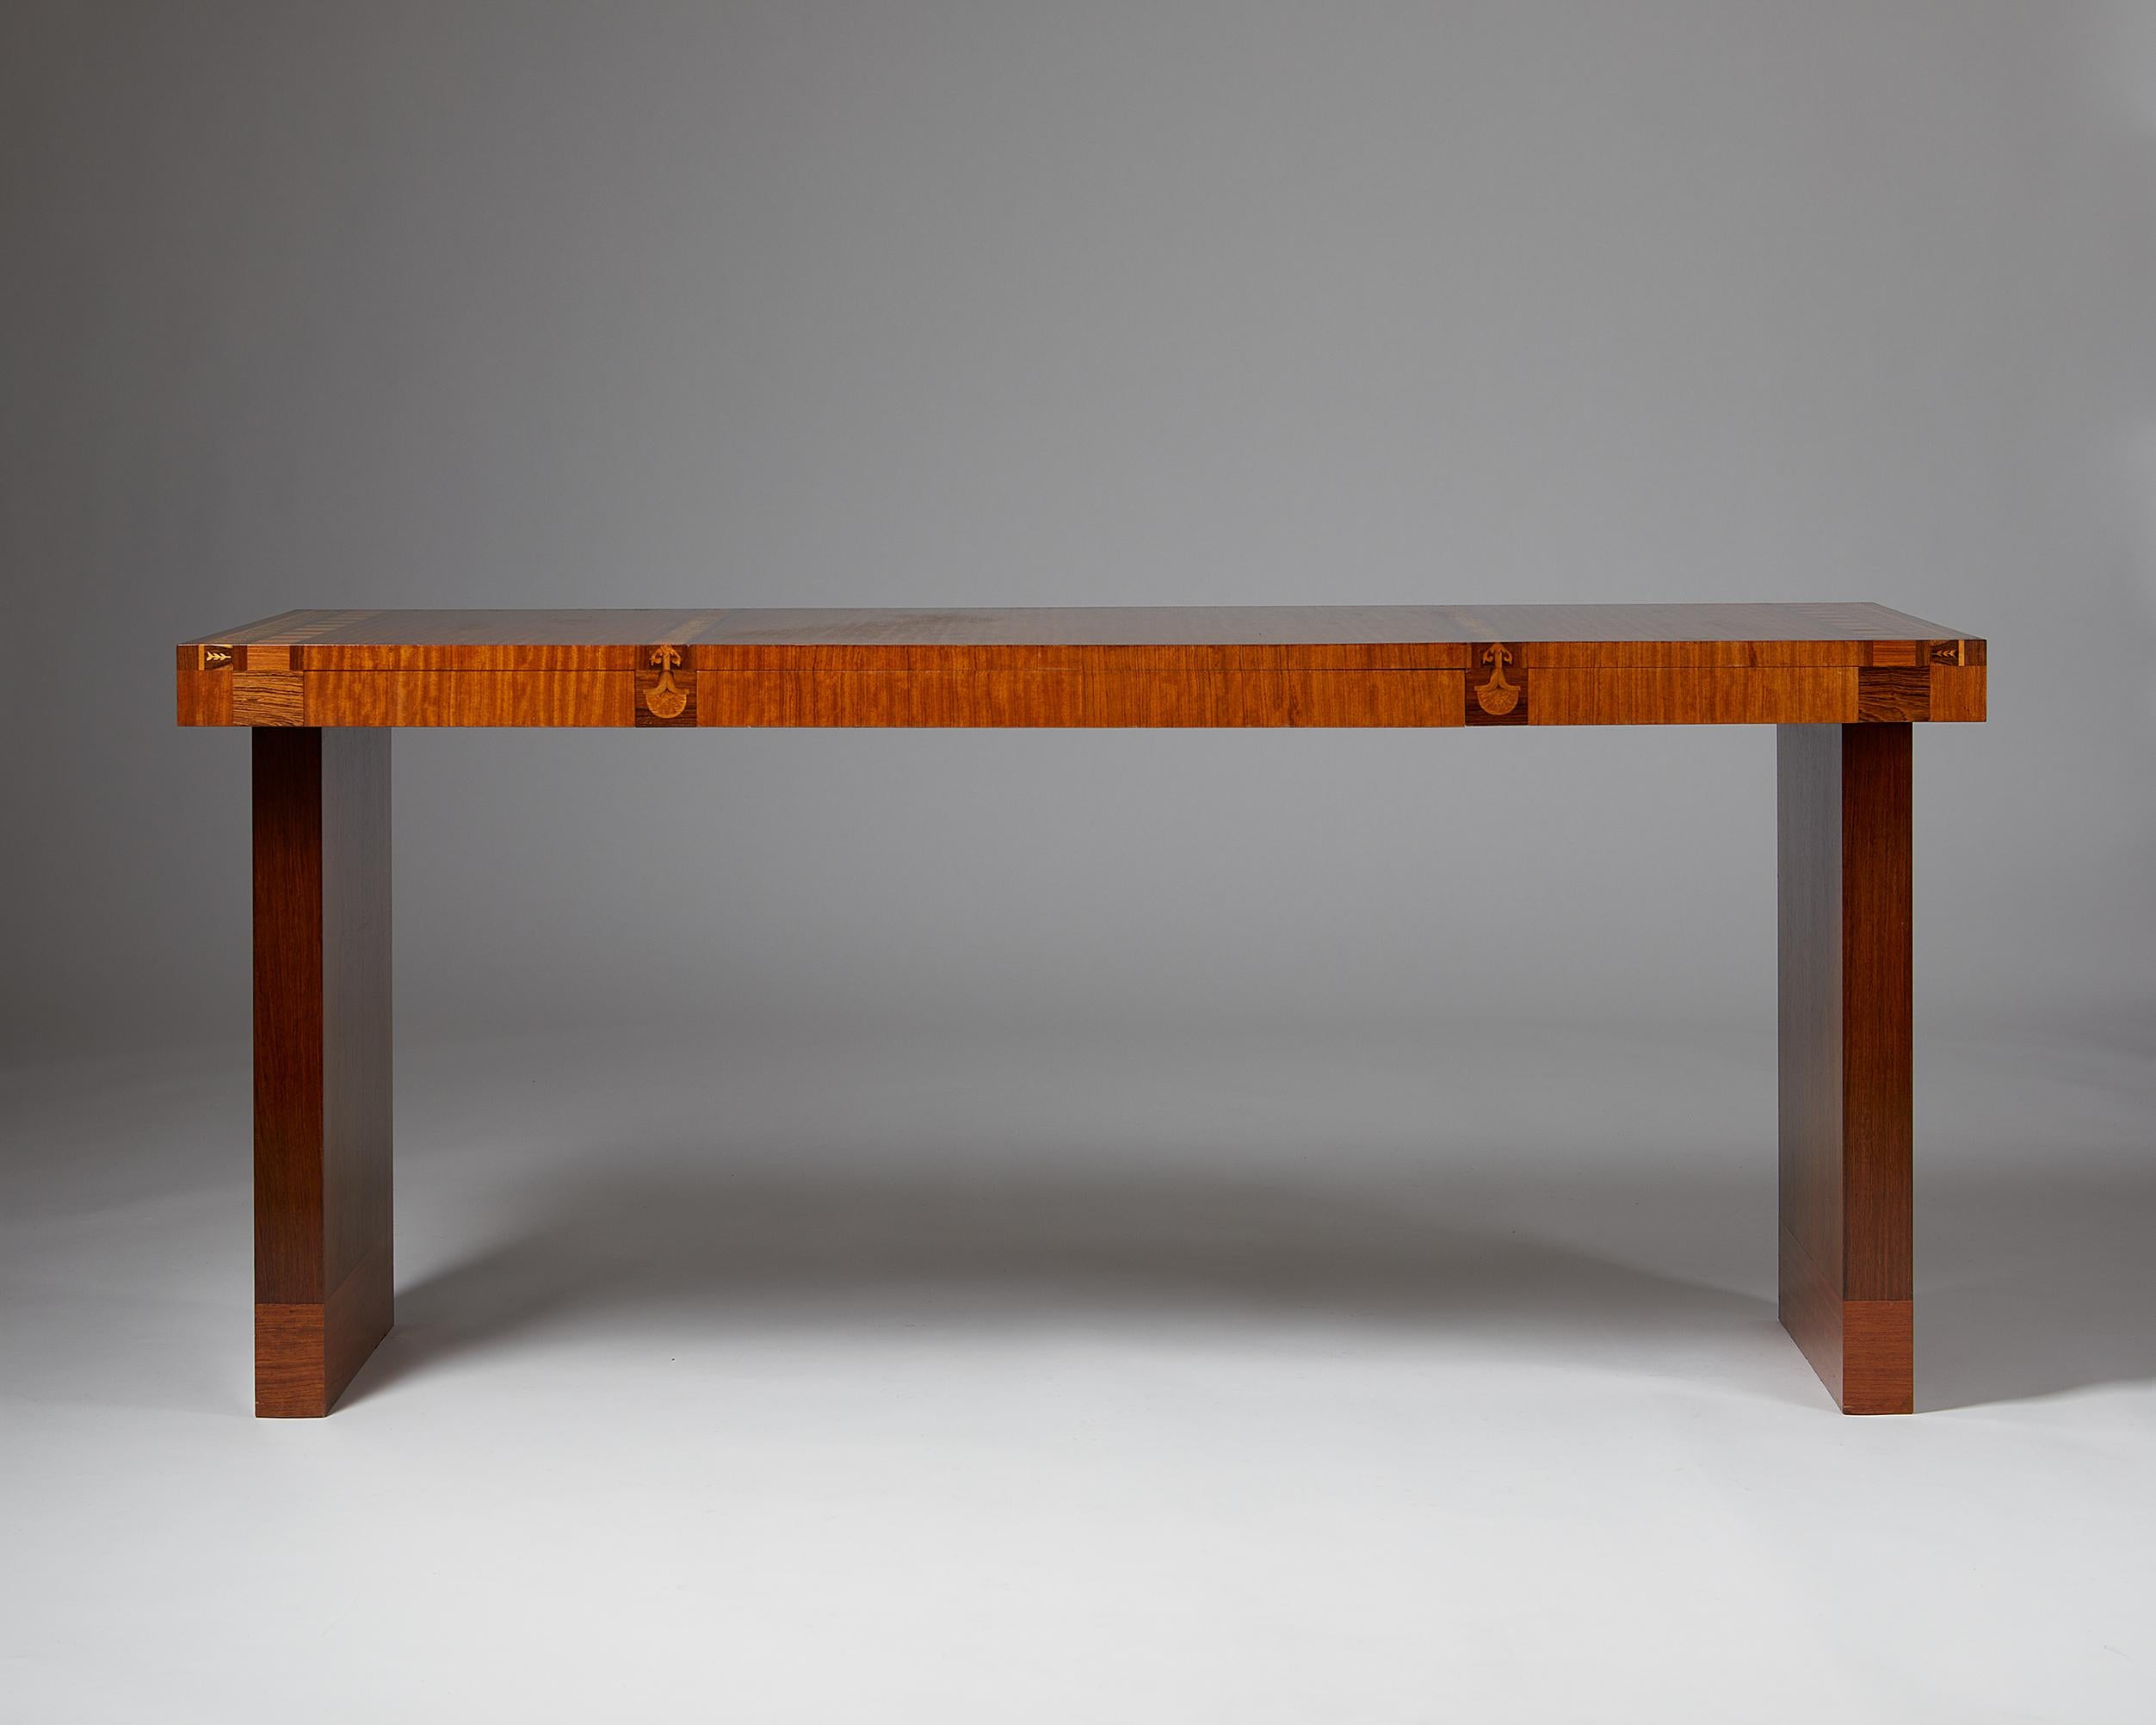 Swedish Desk made of Mahogany and Walnut Designed by Carl Malmsten, Sweden, 1934